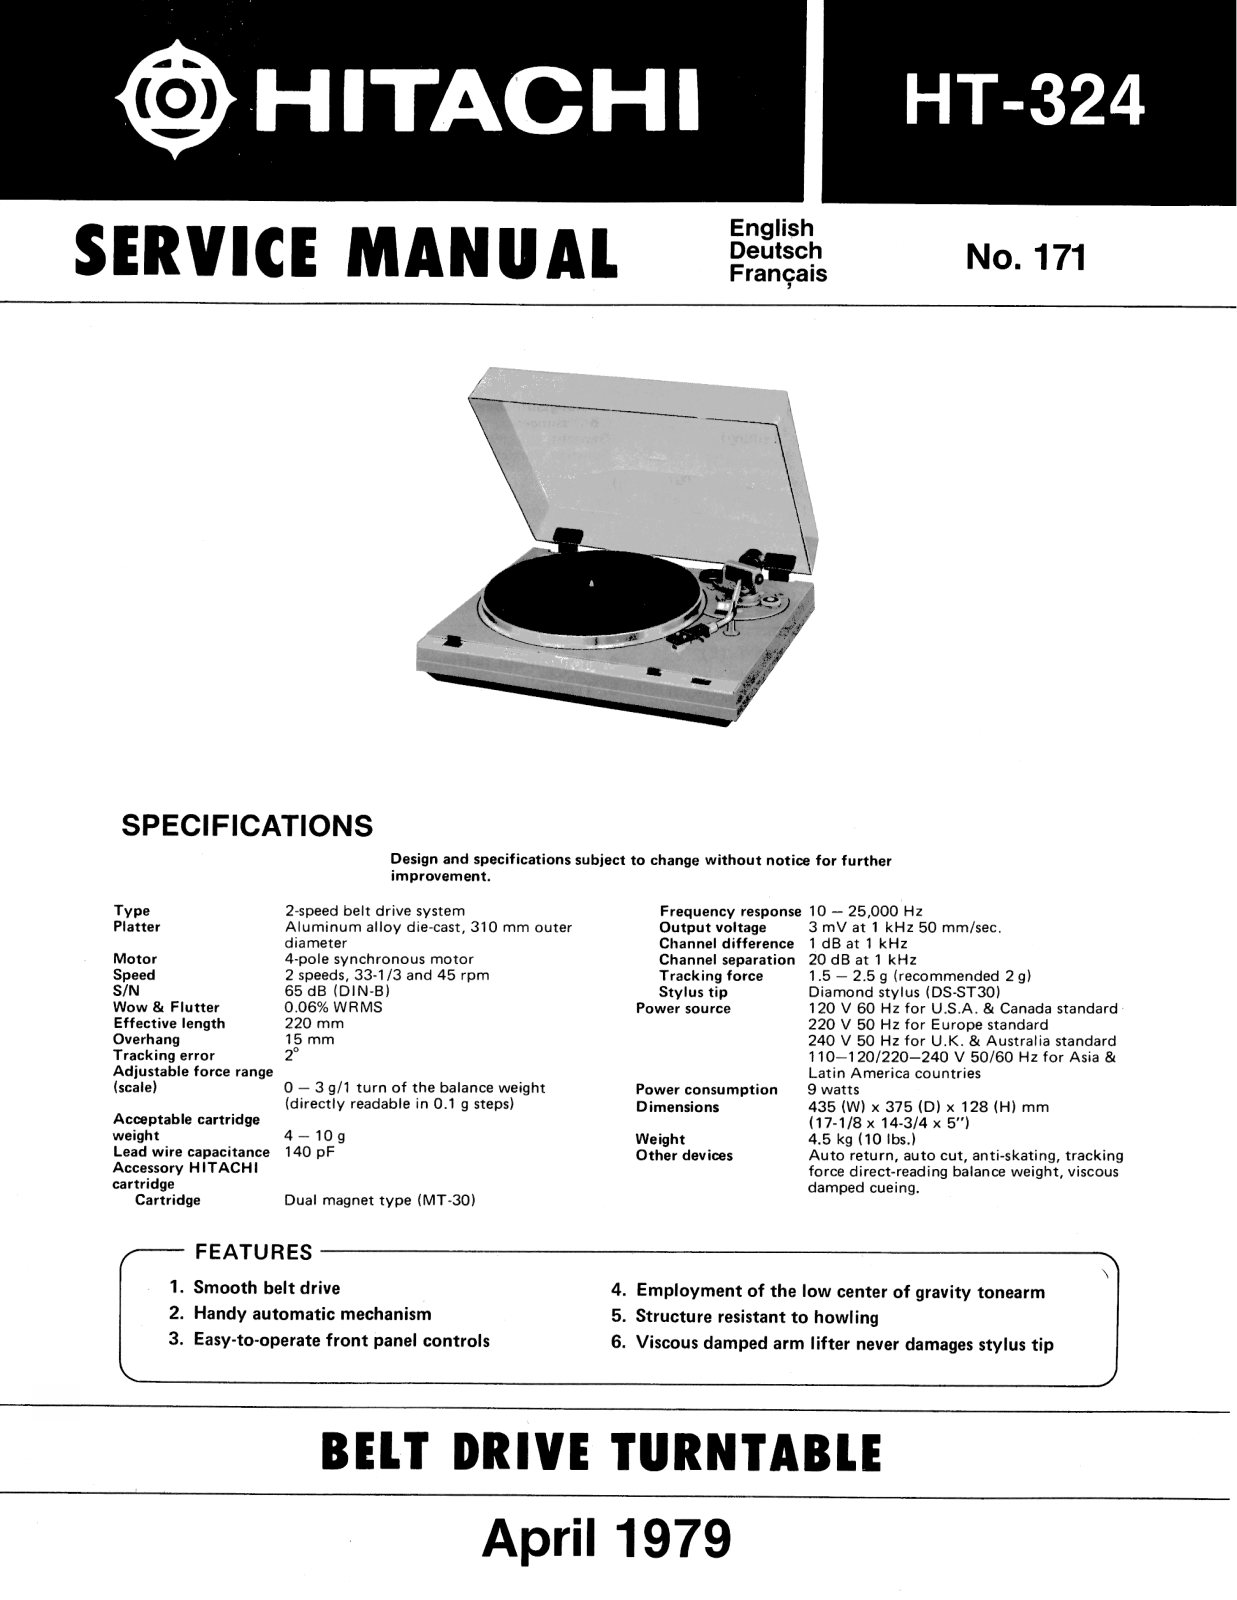 Hitachi HT-324 Service Manual